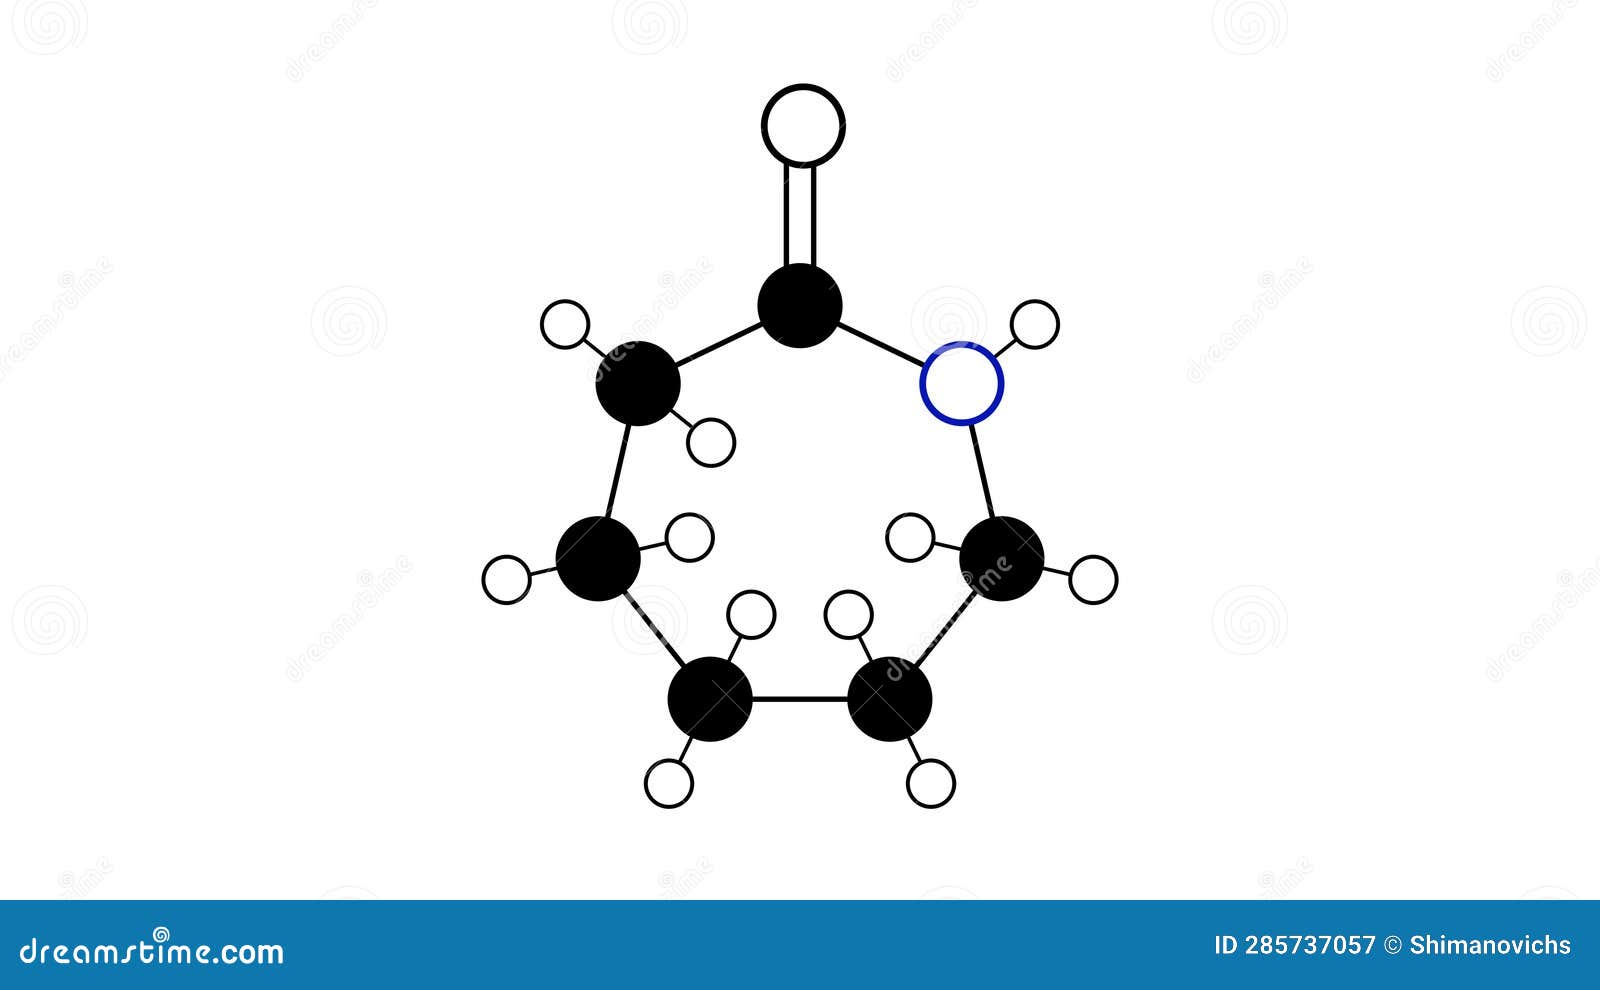 caprolactam molecule, structural chemical formula, ball-and-stick model,  image cyclic amide